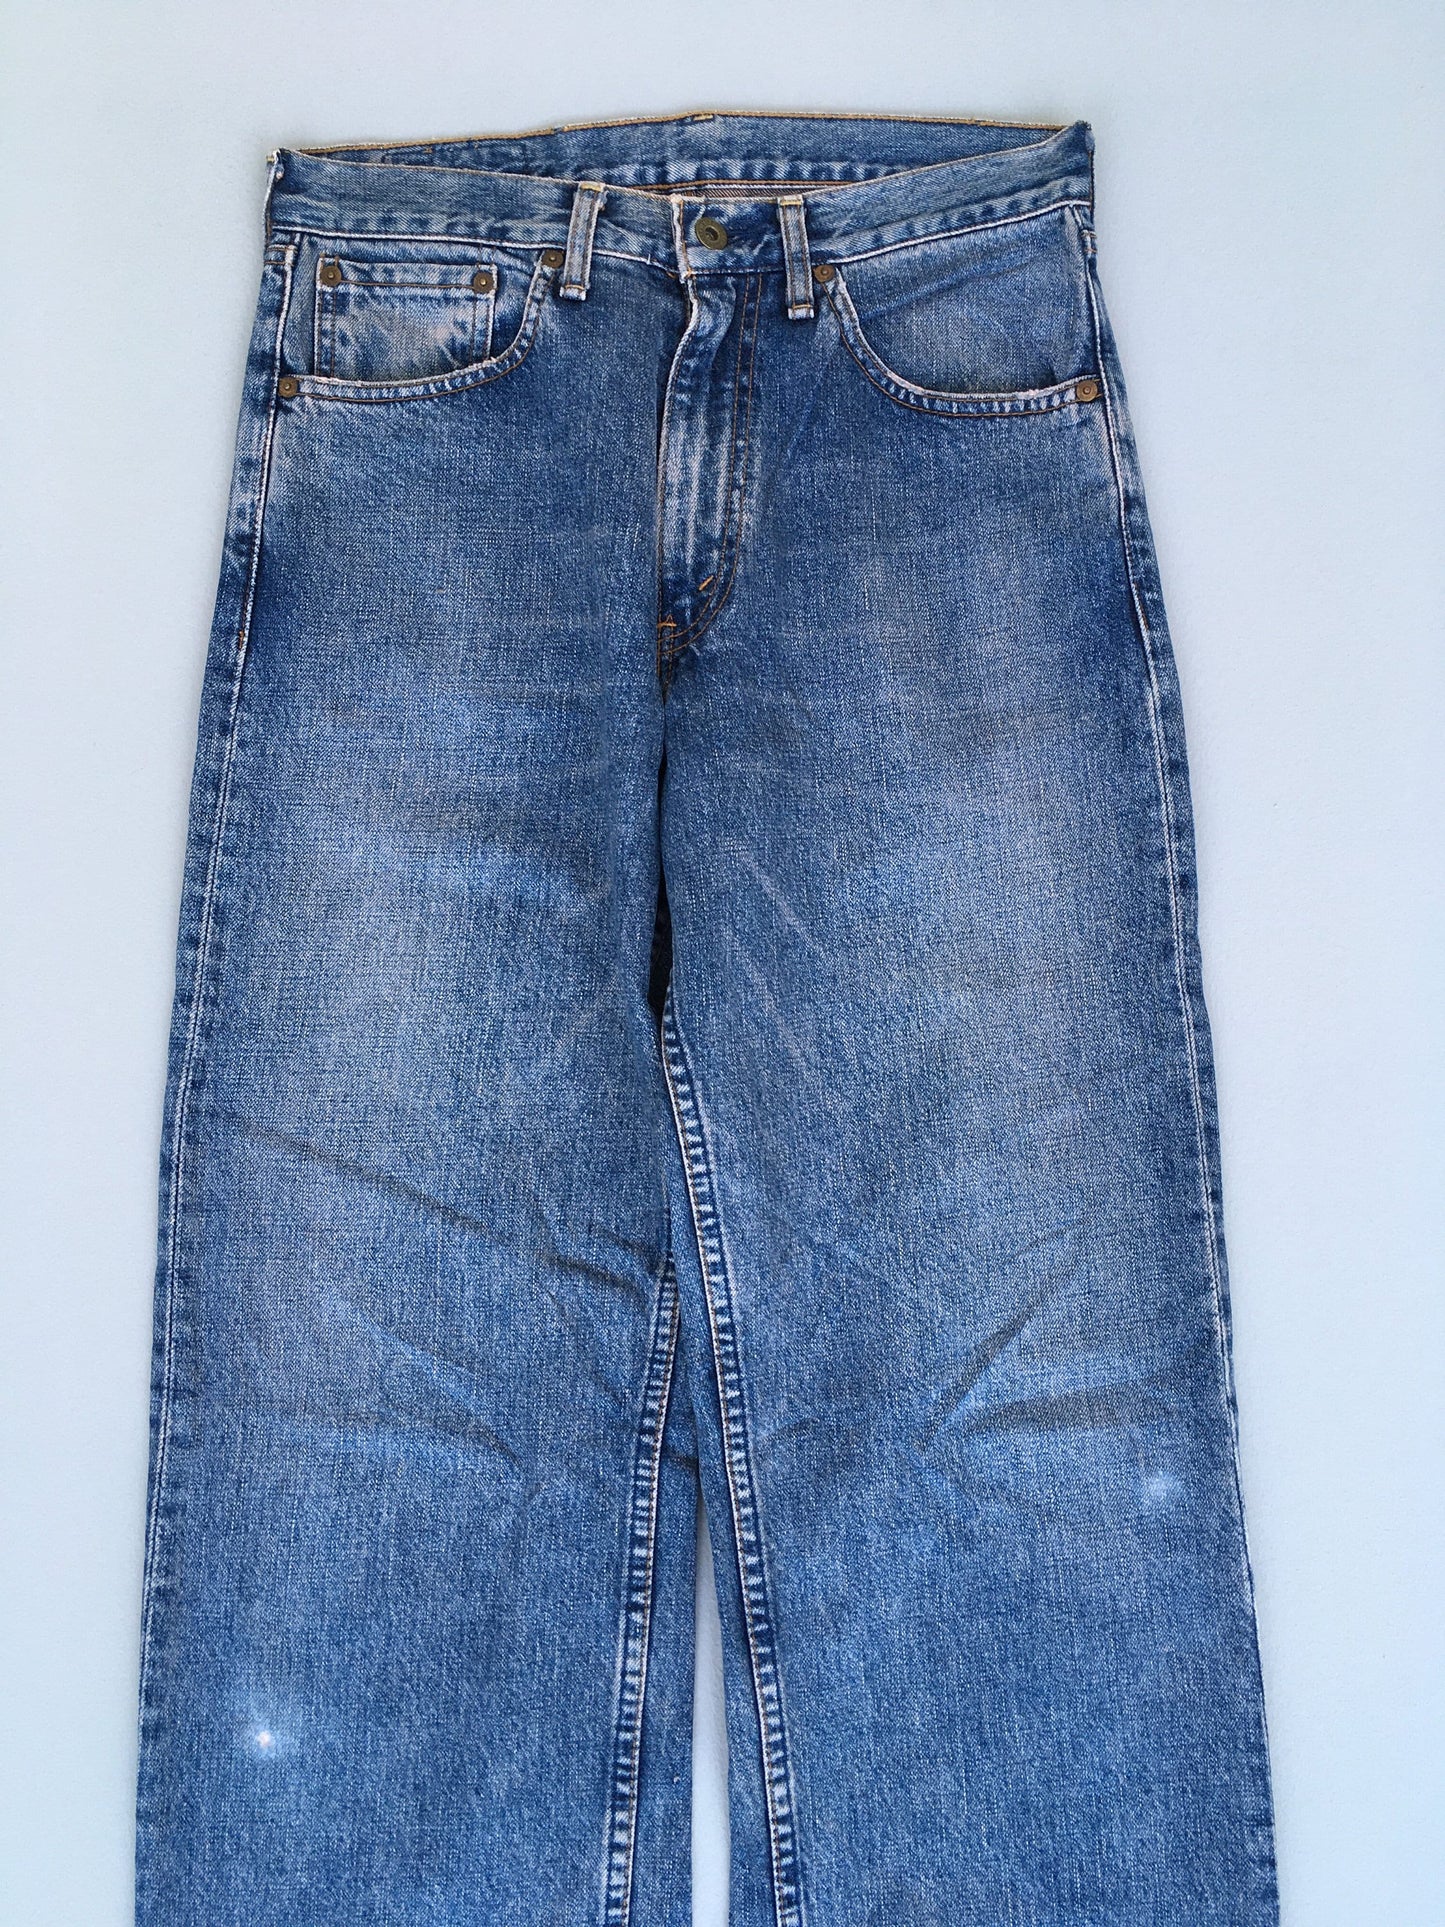 Size 30x35 Levis 504 Japan Light Washed Jeans